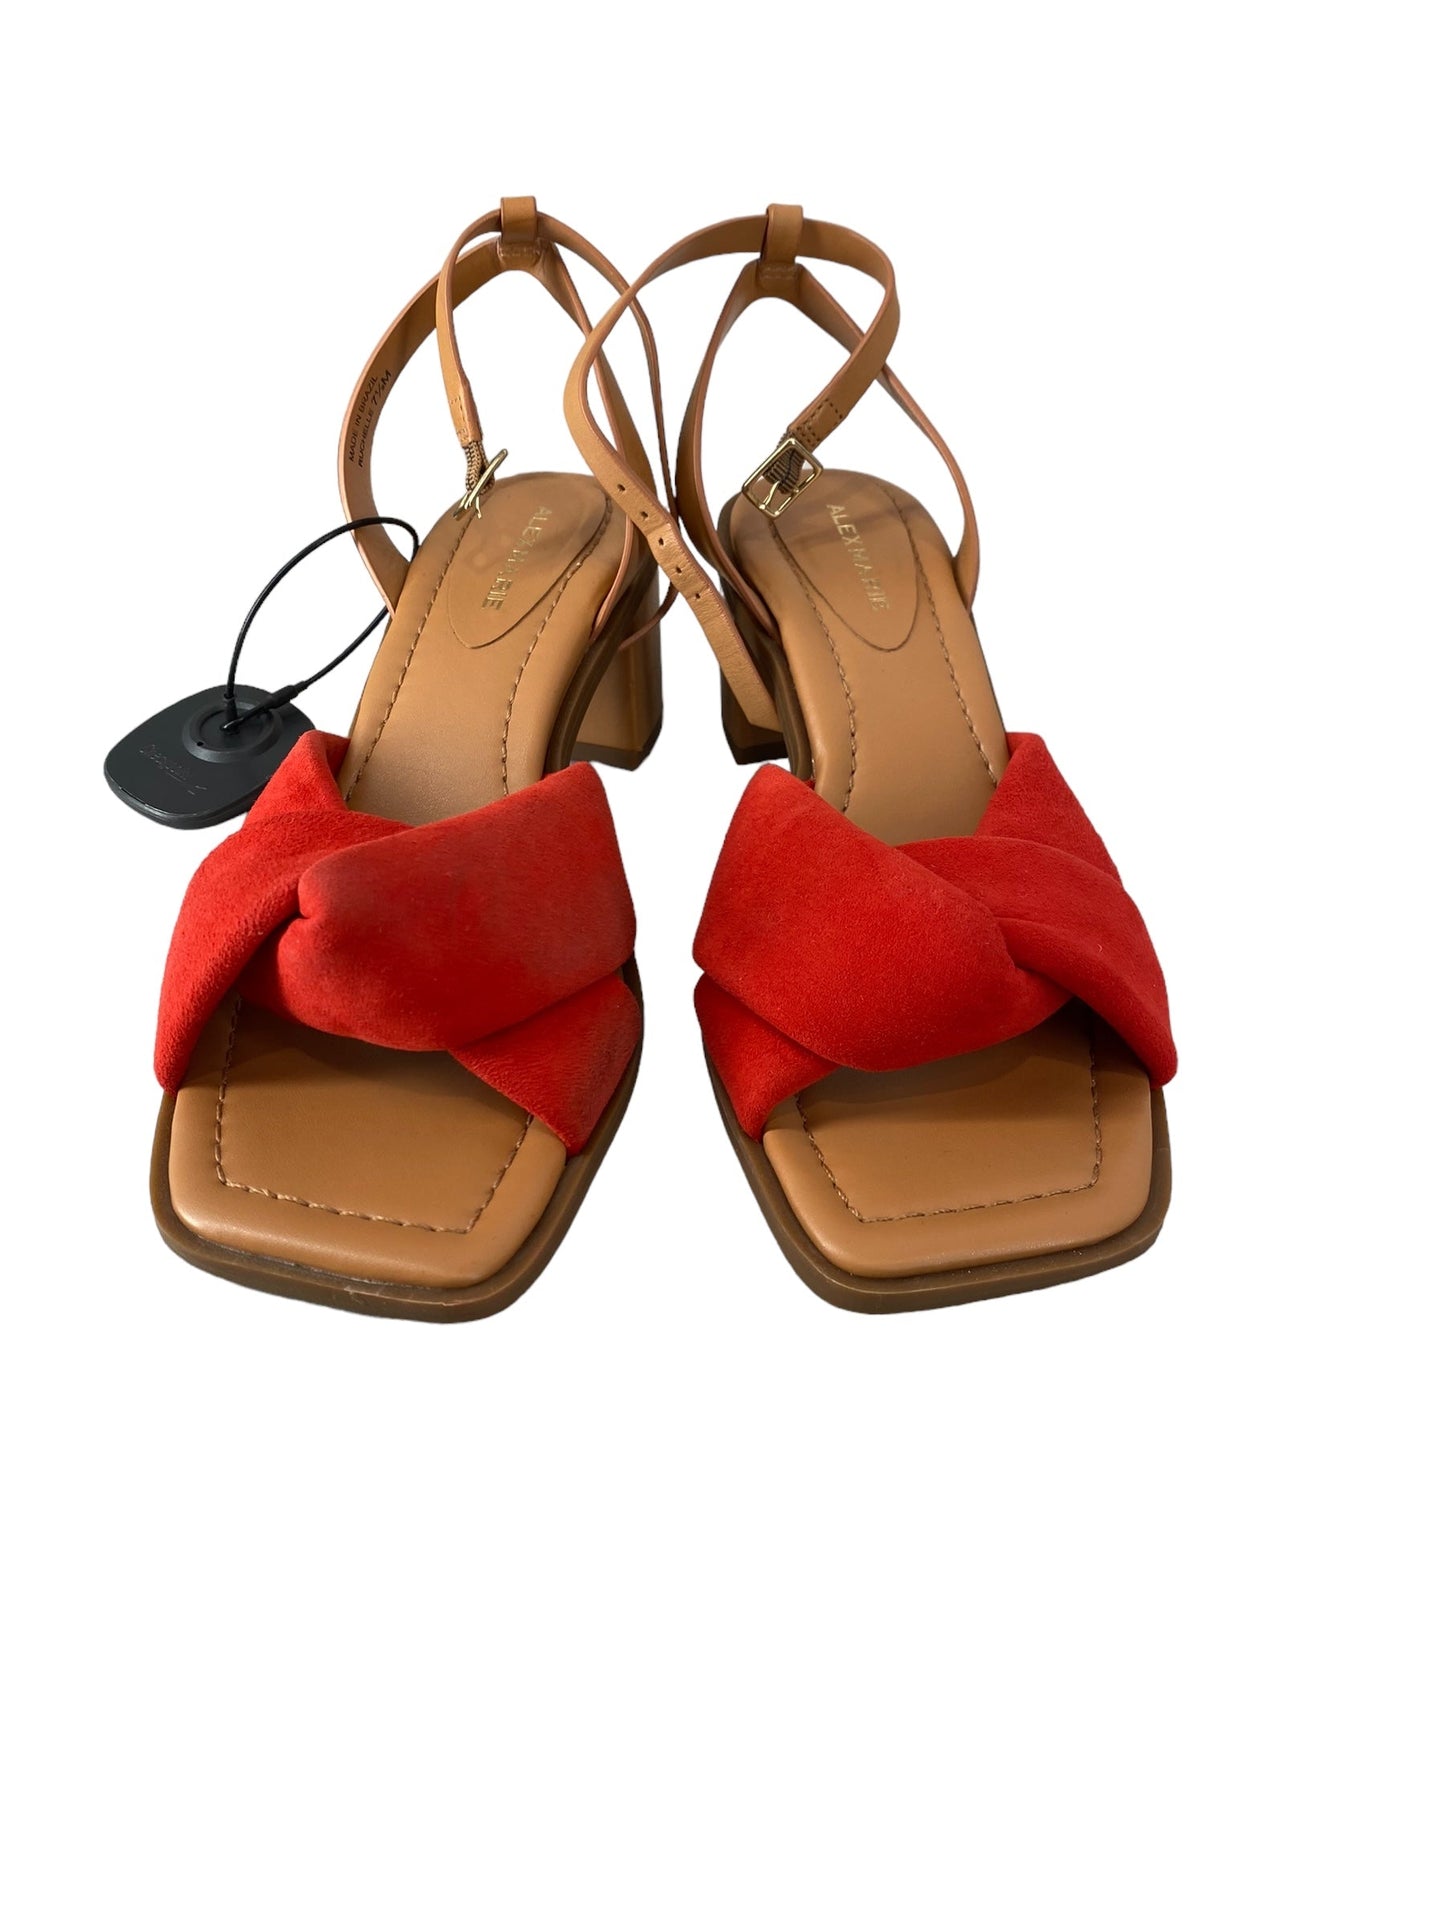 Red Sandals Heels Kitten Alex Marie, Size 7.5